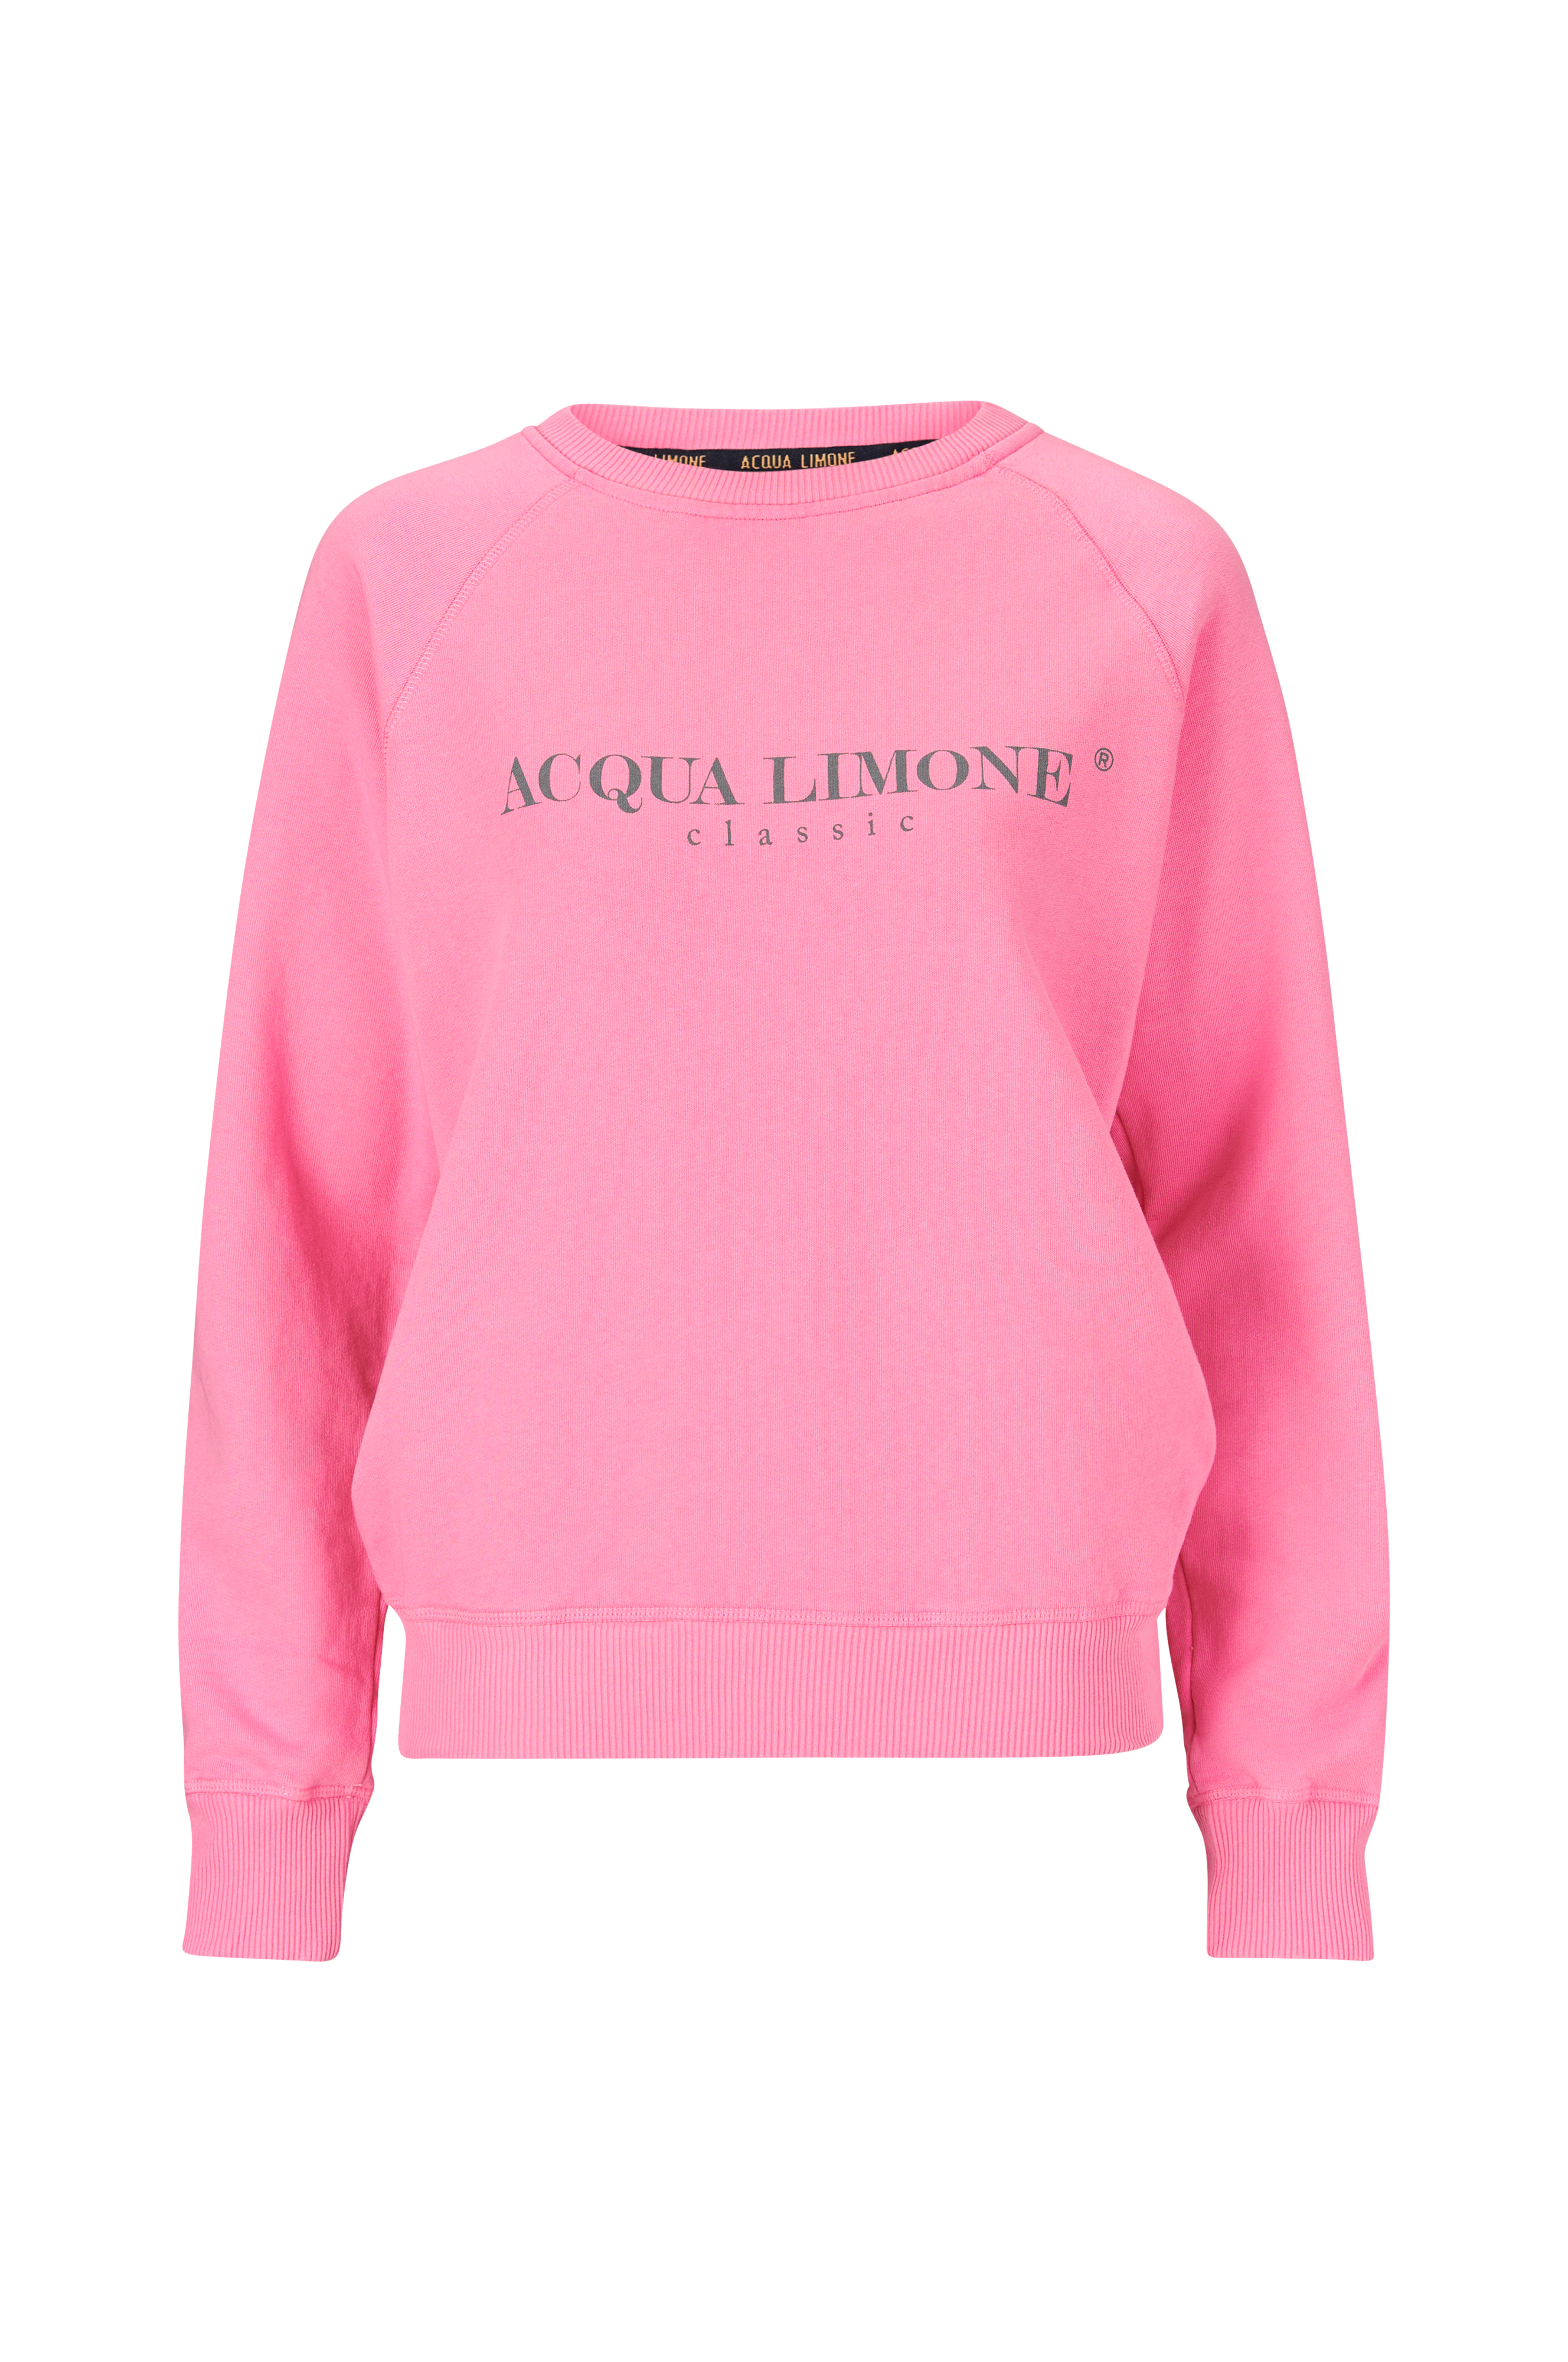 Sund mad program Taxpayer Acqua Limone Sweatshirt College Classic - Rosa - Sweatshirts | Ellos.dk